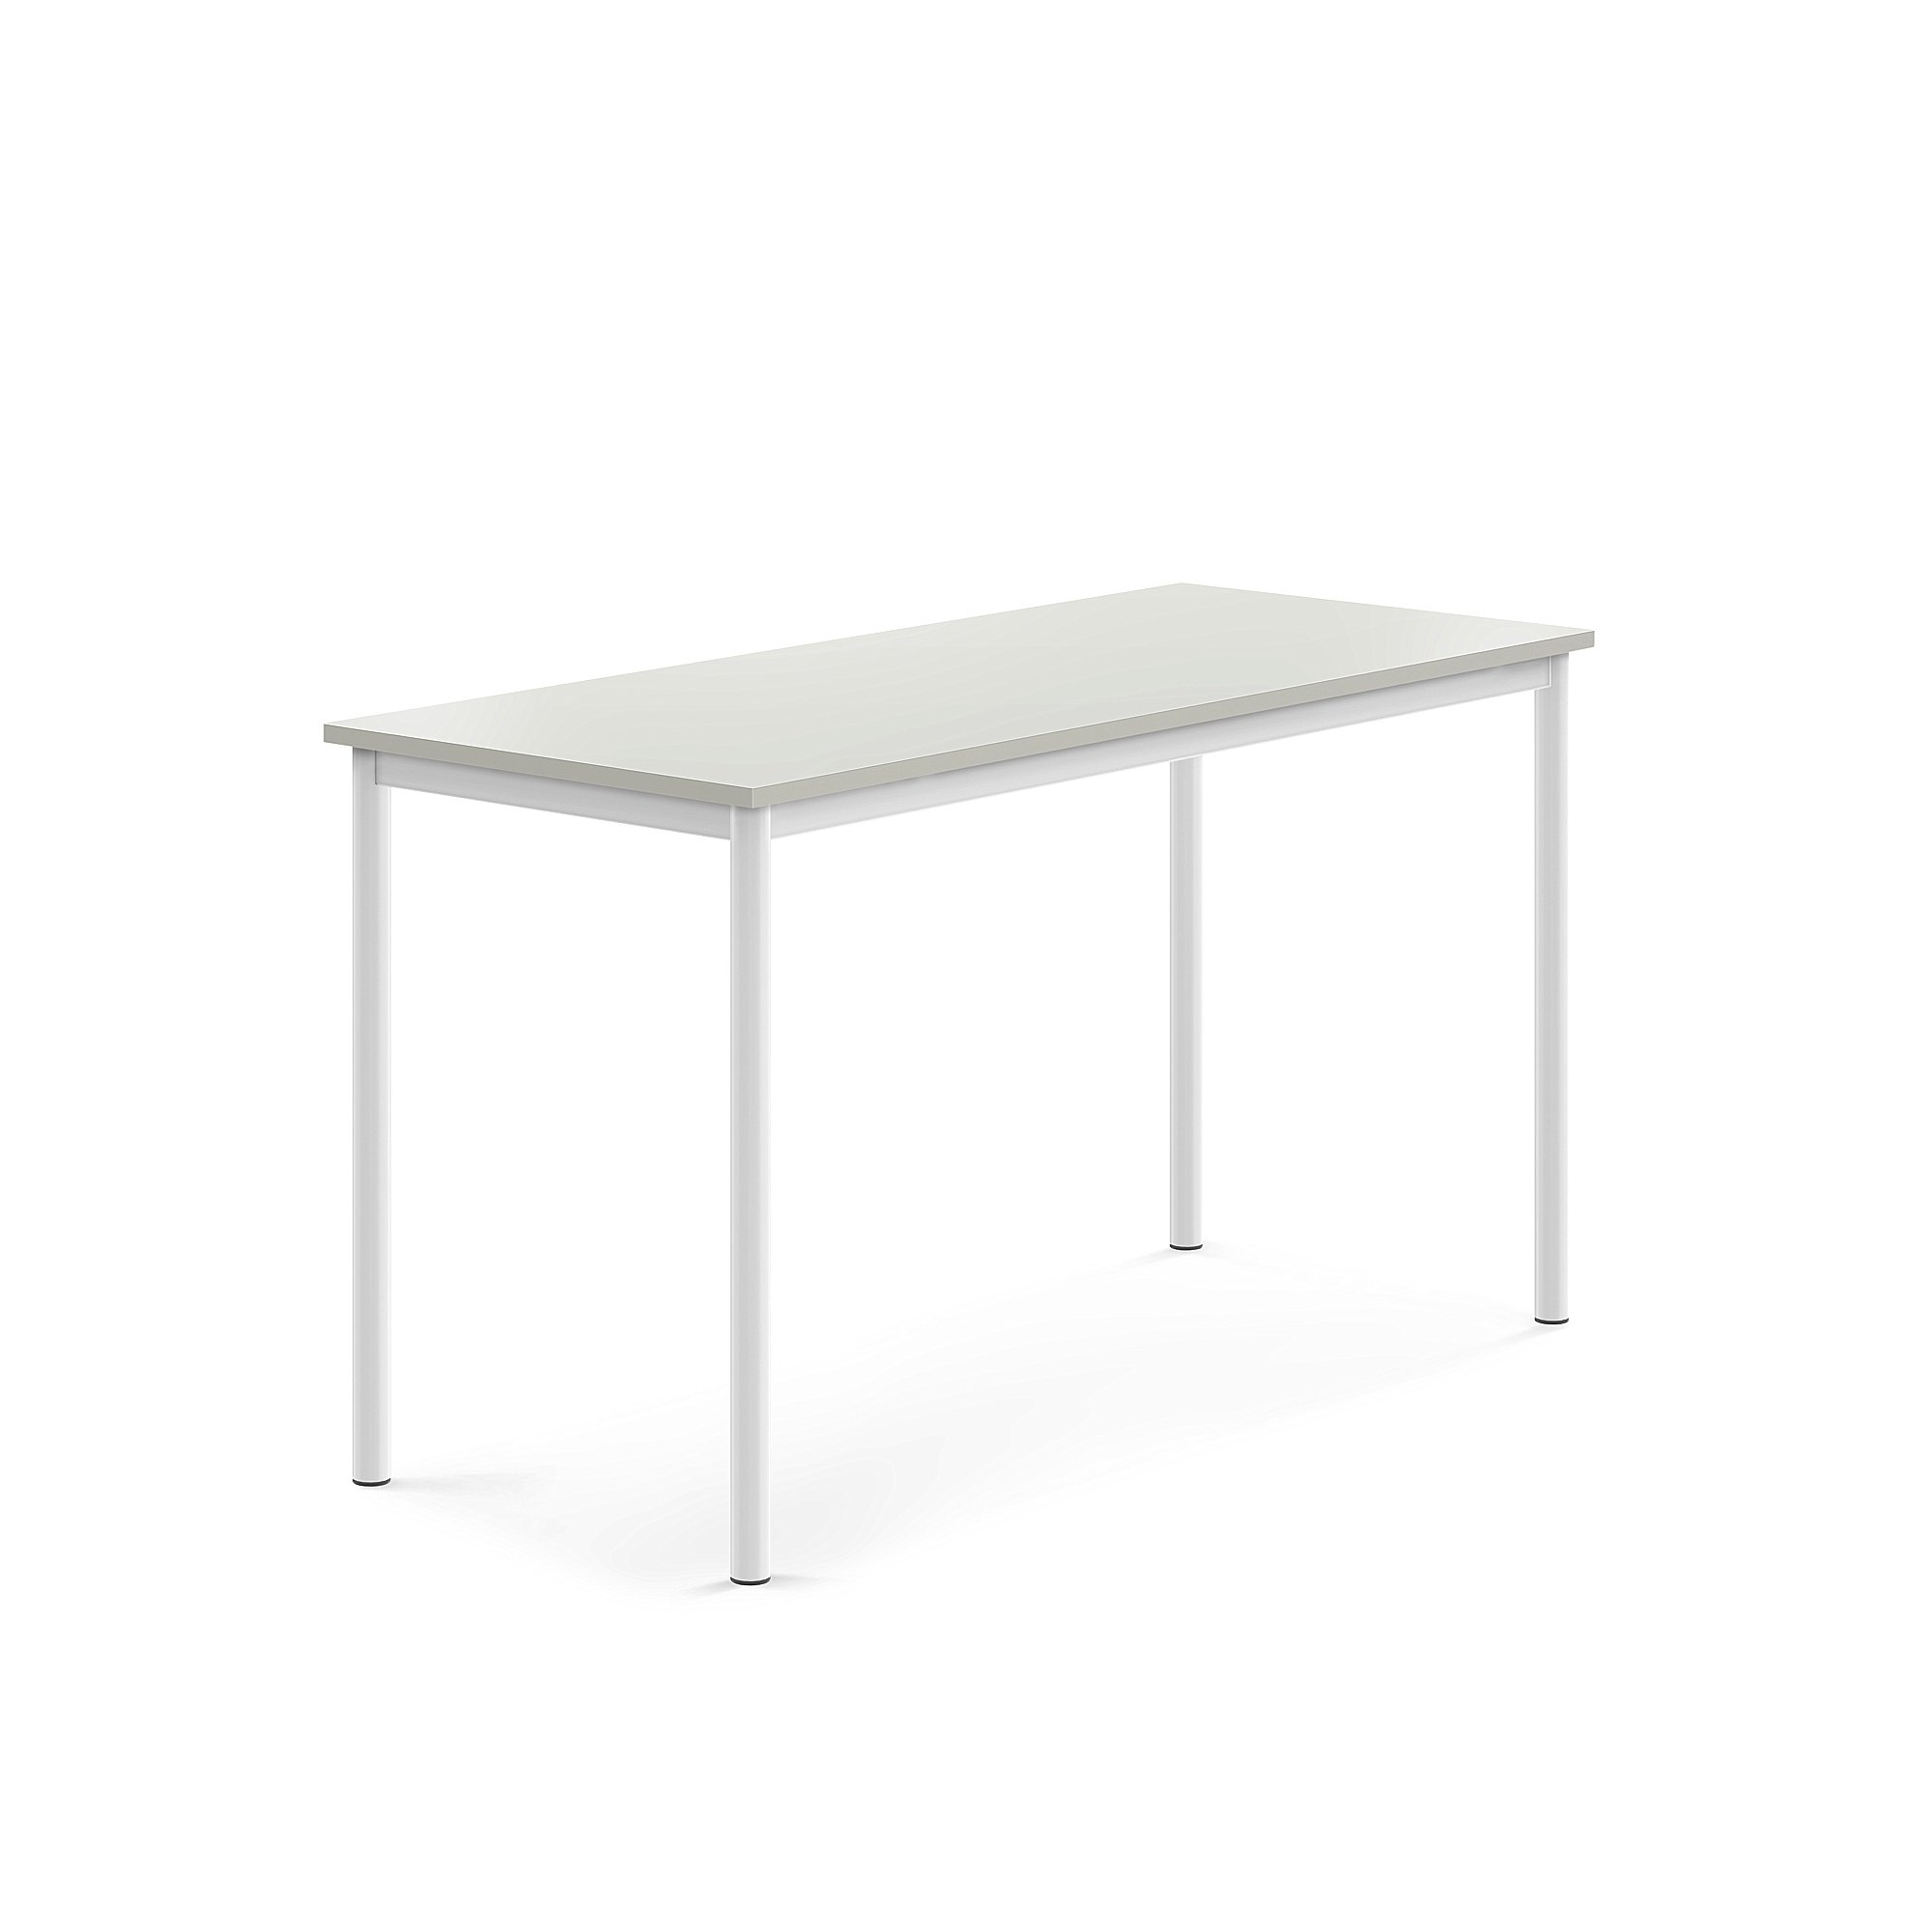 Stůl SONITUS, 1400x600x760 mm, bílé nohy, HPL deska tlumící hluk, šedá